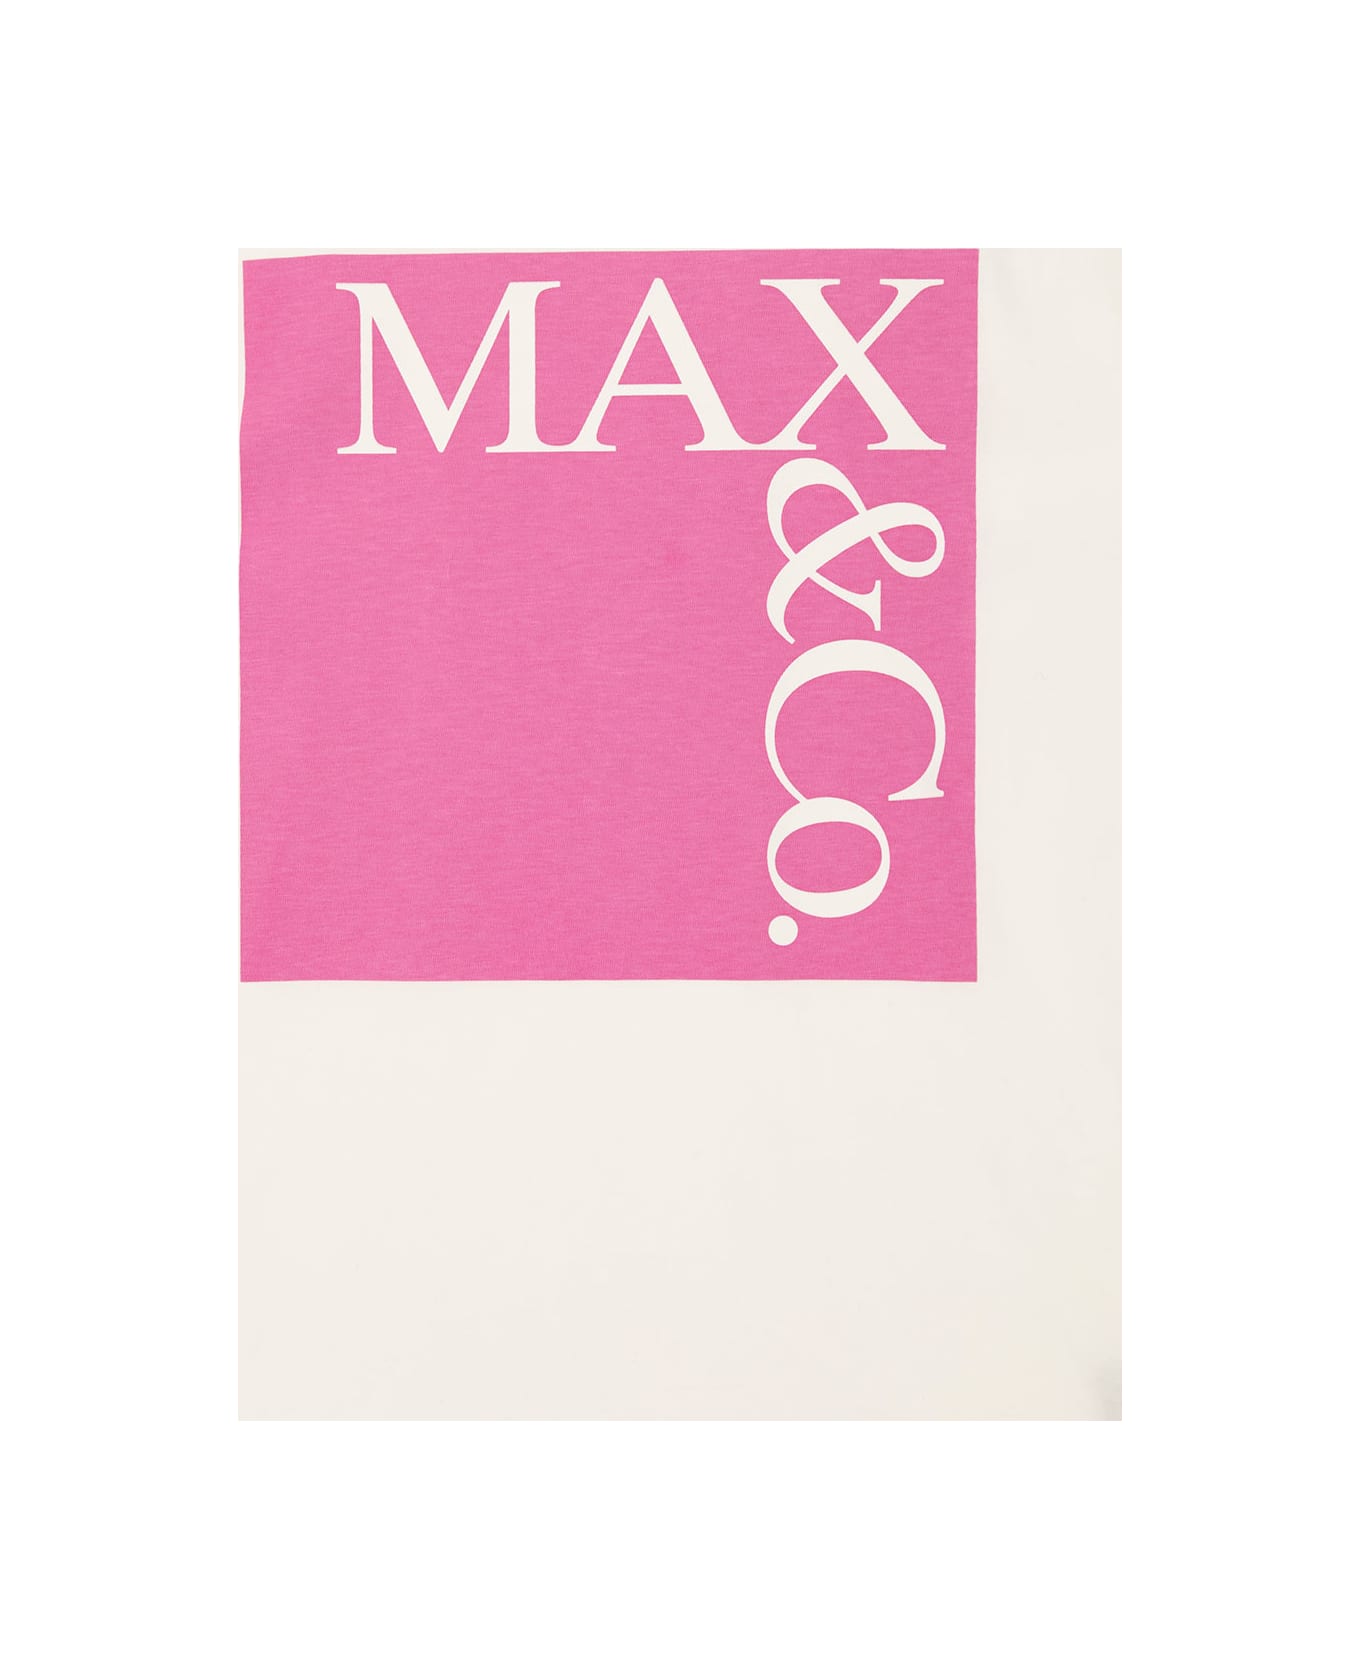 Max&Co. Mx0005mx014maxt1fmx10a - A